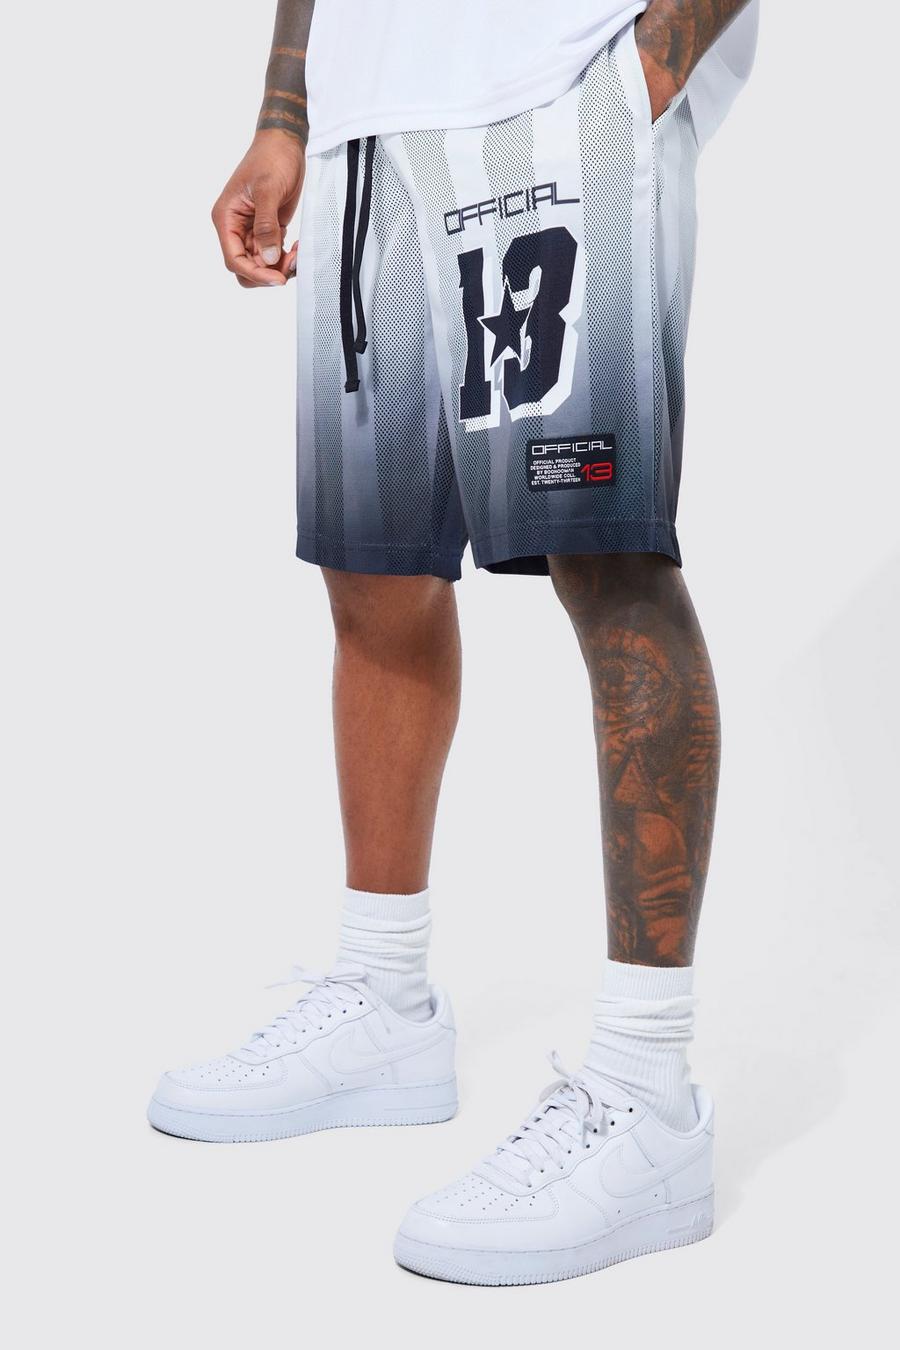 Mesh Basketball-Shorts mit 13-Print, White